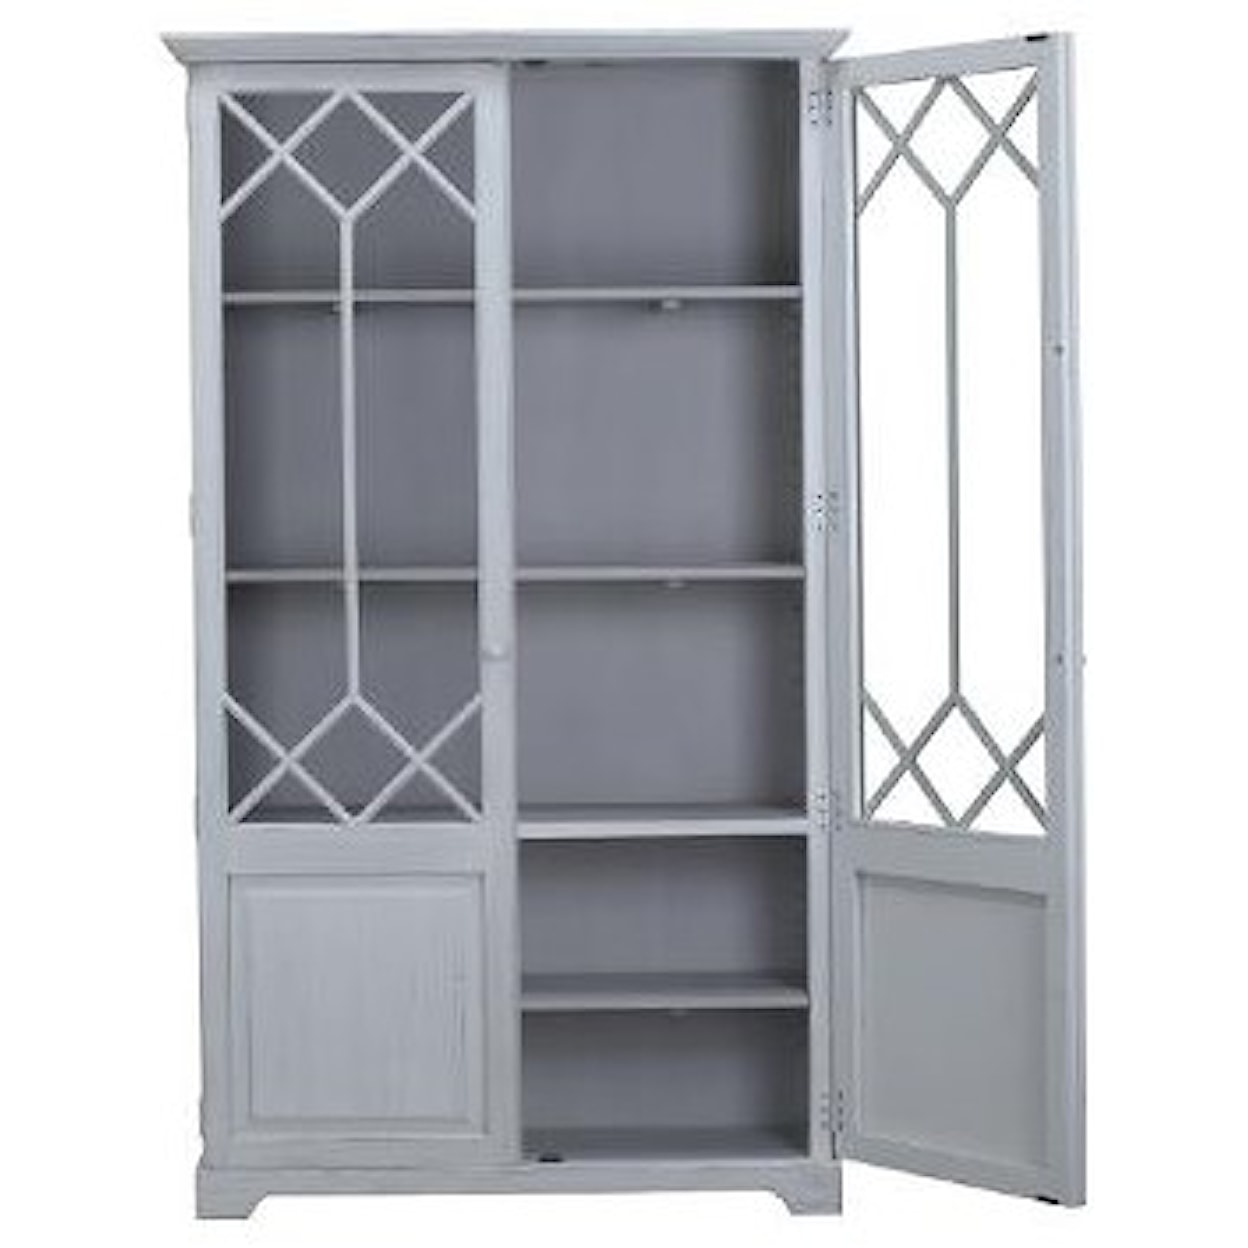 Dovetail Furniture Cabinets Alton Cabinet